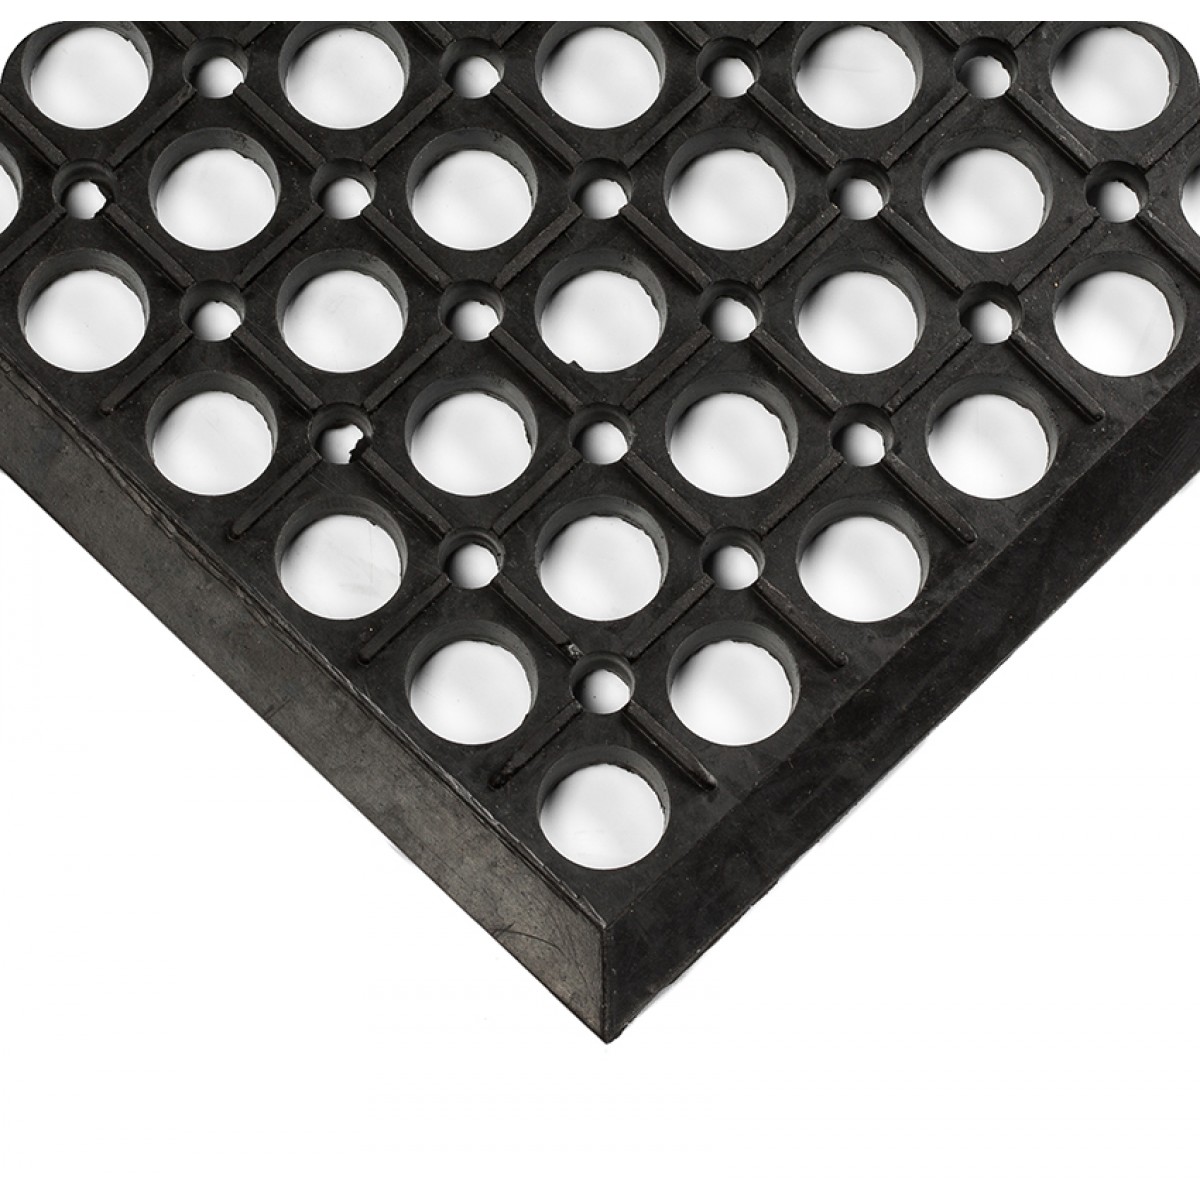 Cushion-Ease Perforated Interlocking Kitchen Mats